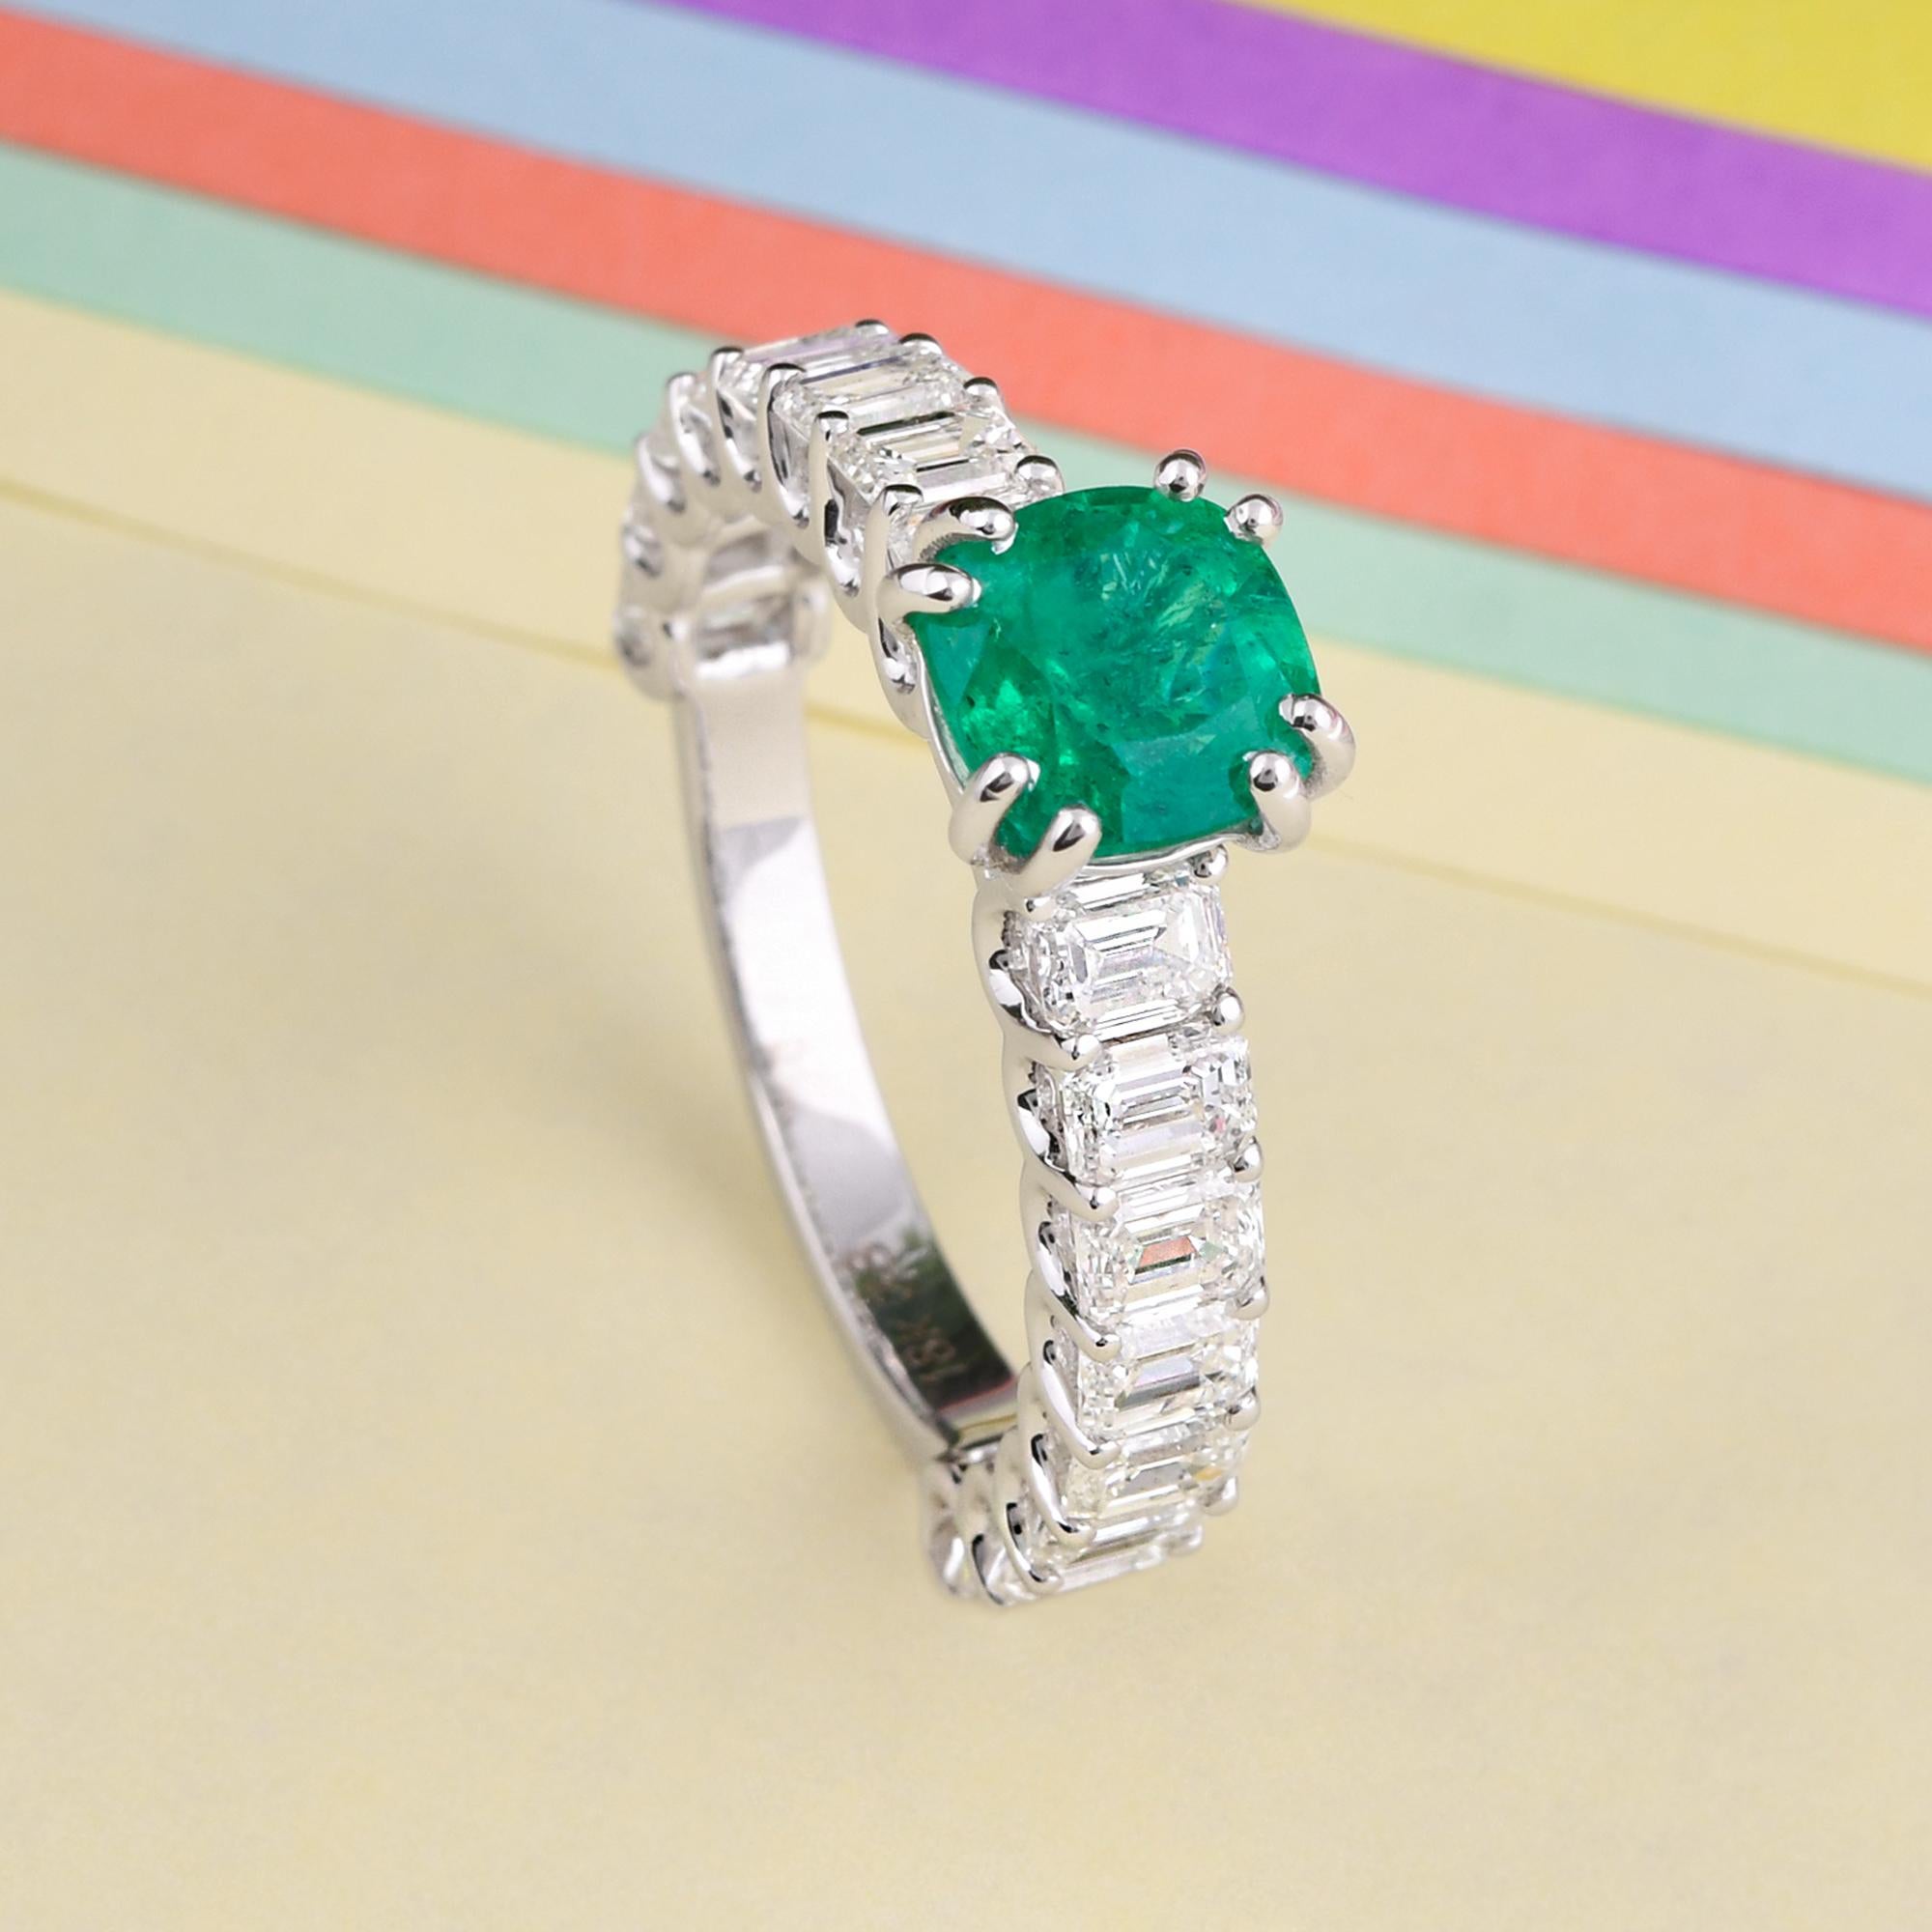 For Sale:  Natural Emerald Gemstone Ring Emerald Cut Diamond 18 Karat White Gold Jewelry 2